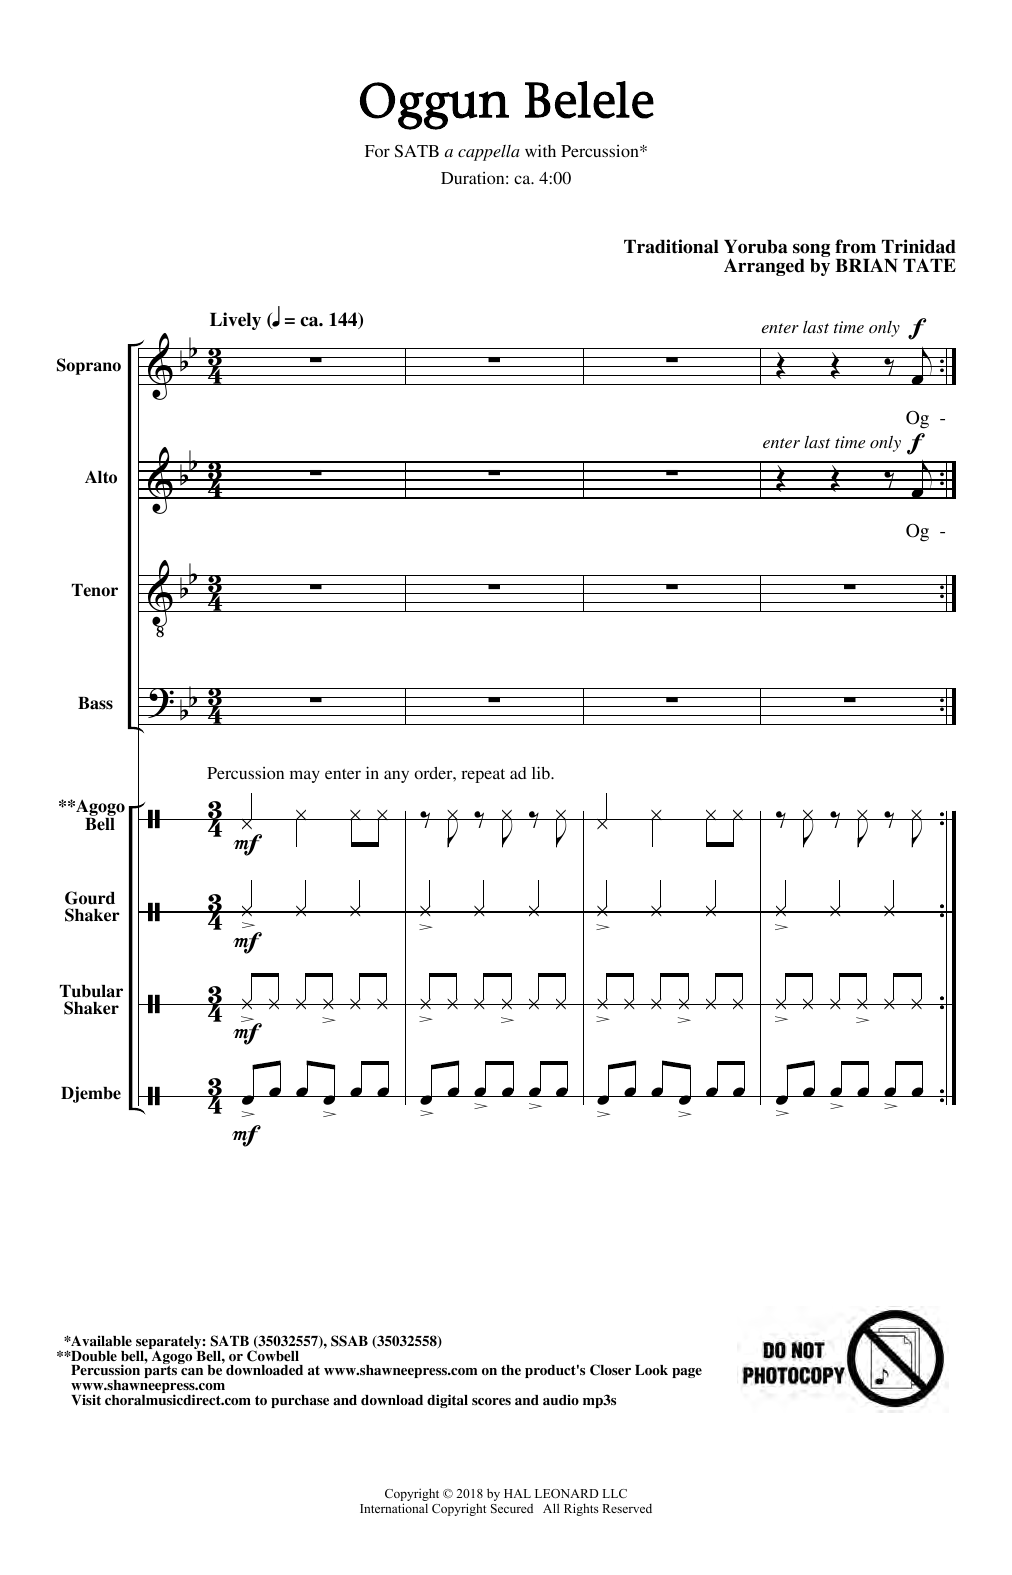 Brian Tate Oggun Belele Sheet Music Notes & Chords for SATB Choir - Download or Print PDF